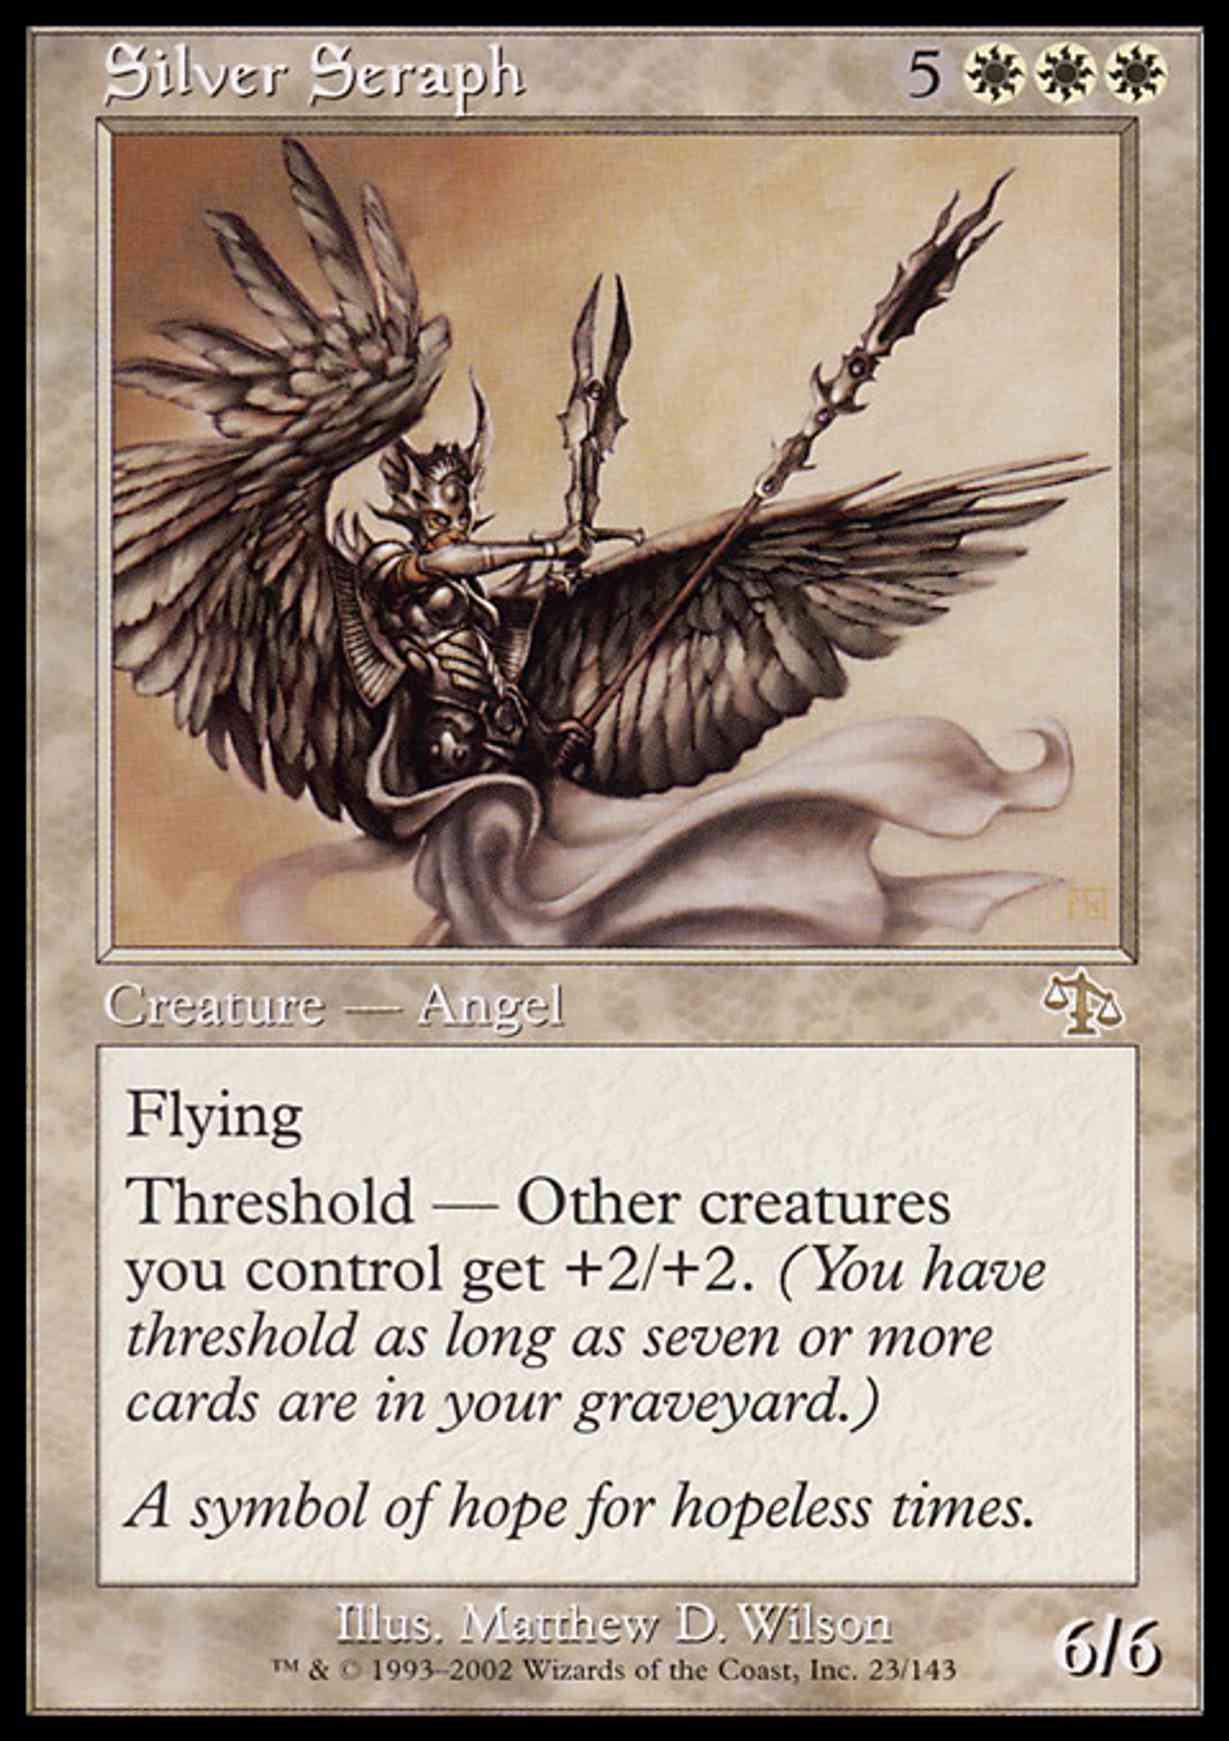 Silver Seraph magic card front